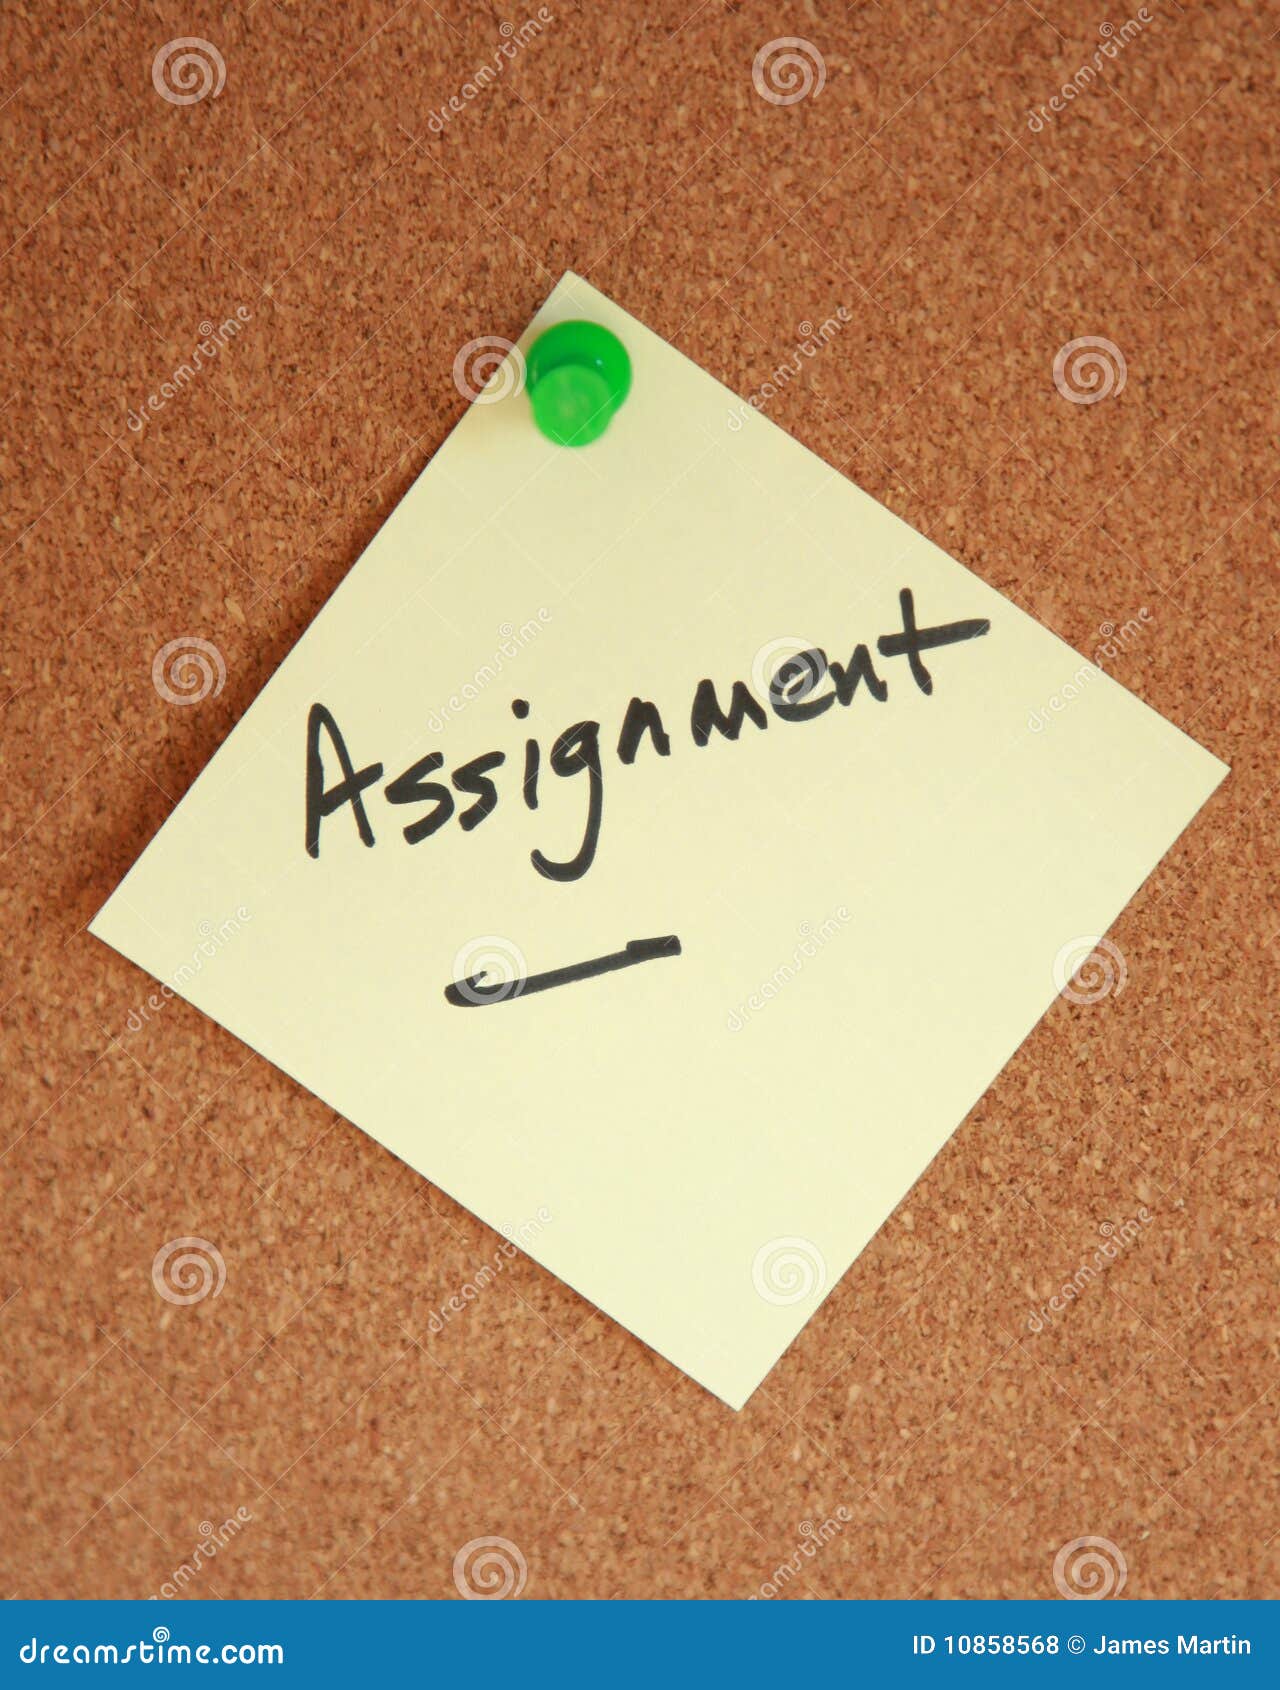 assignment witten on note stuck to corkboard